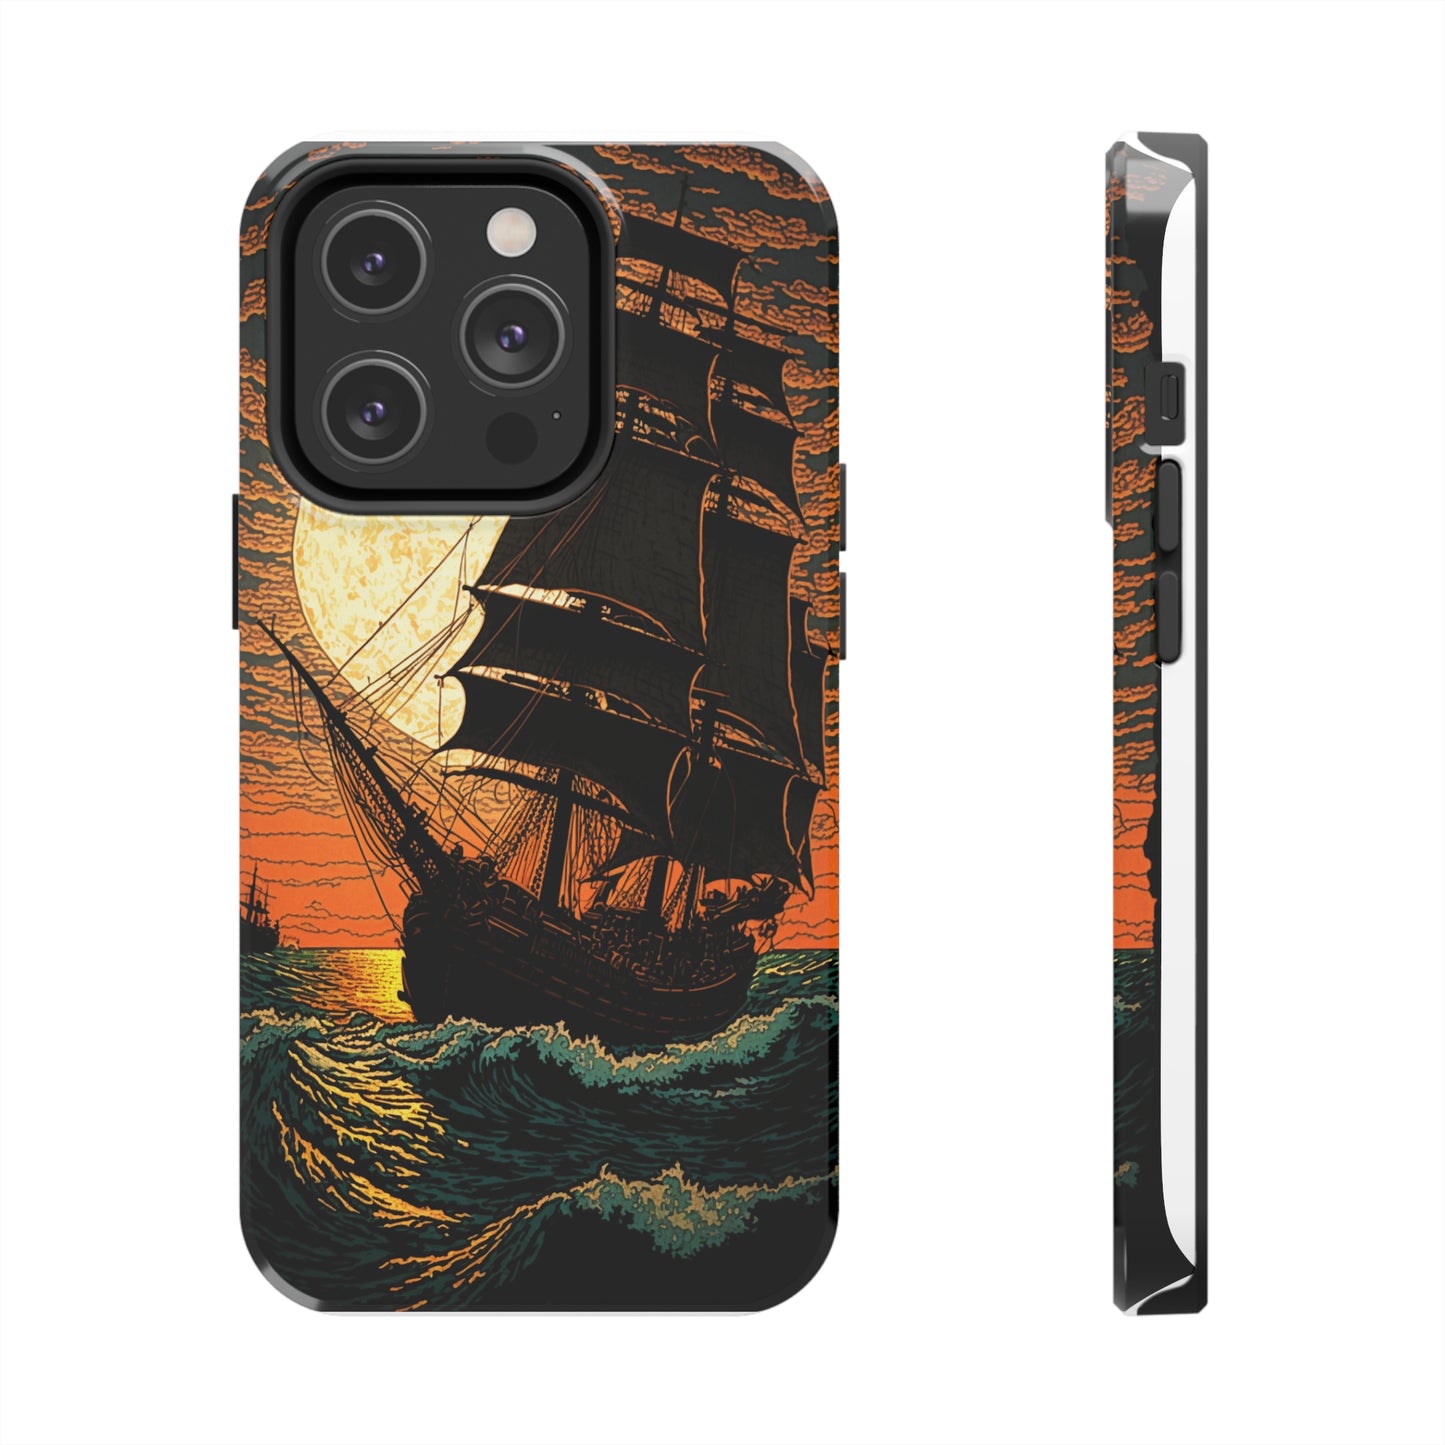 Nautical-themed sunset iPhone case